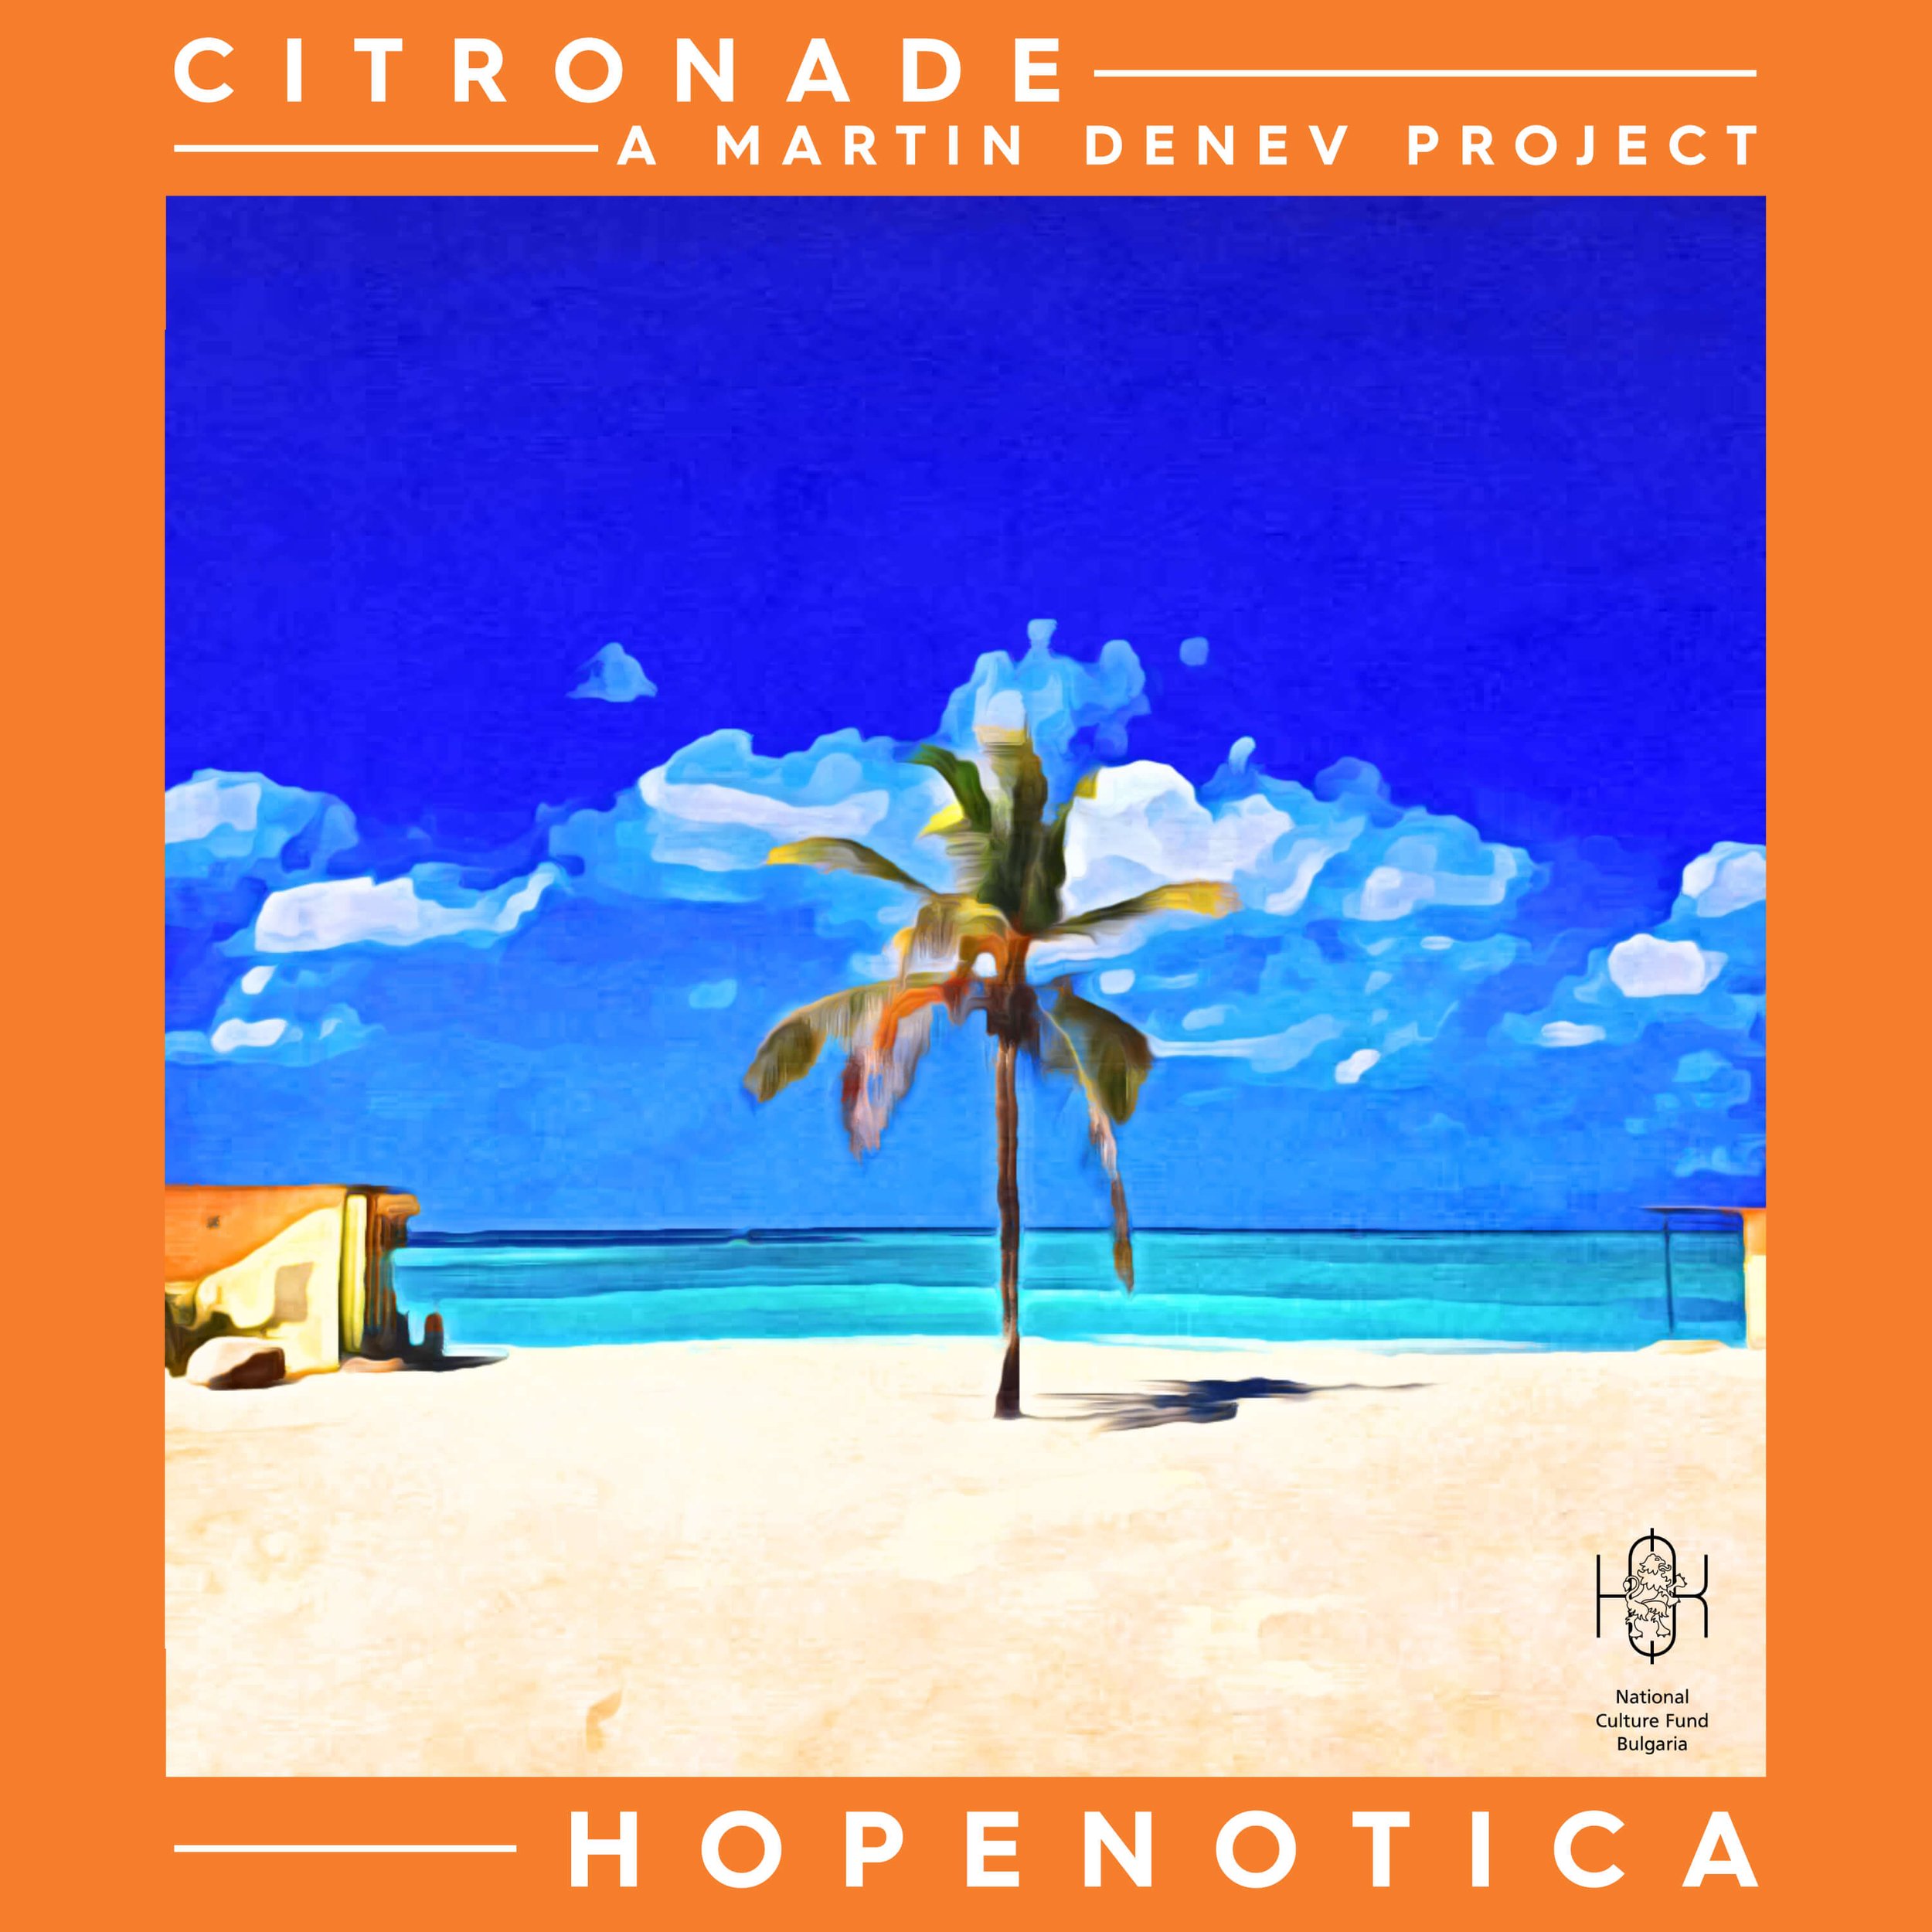 Citronade (A Martin Denev Project) - Hopenotica (Issa'min)